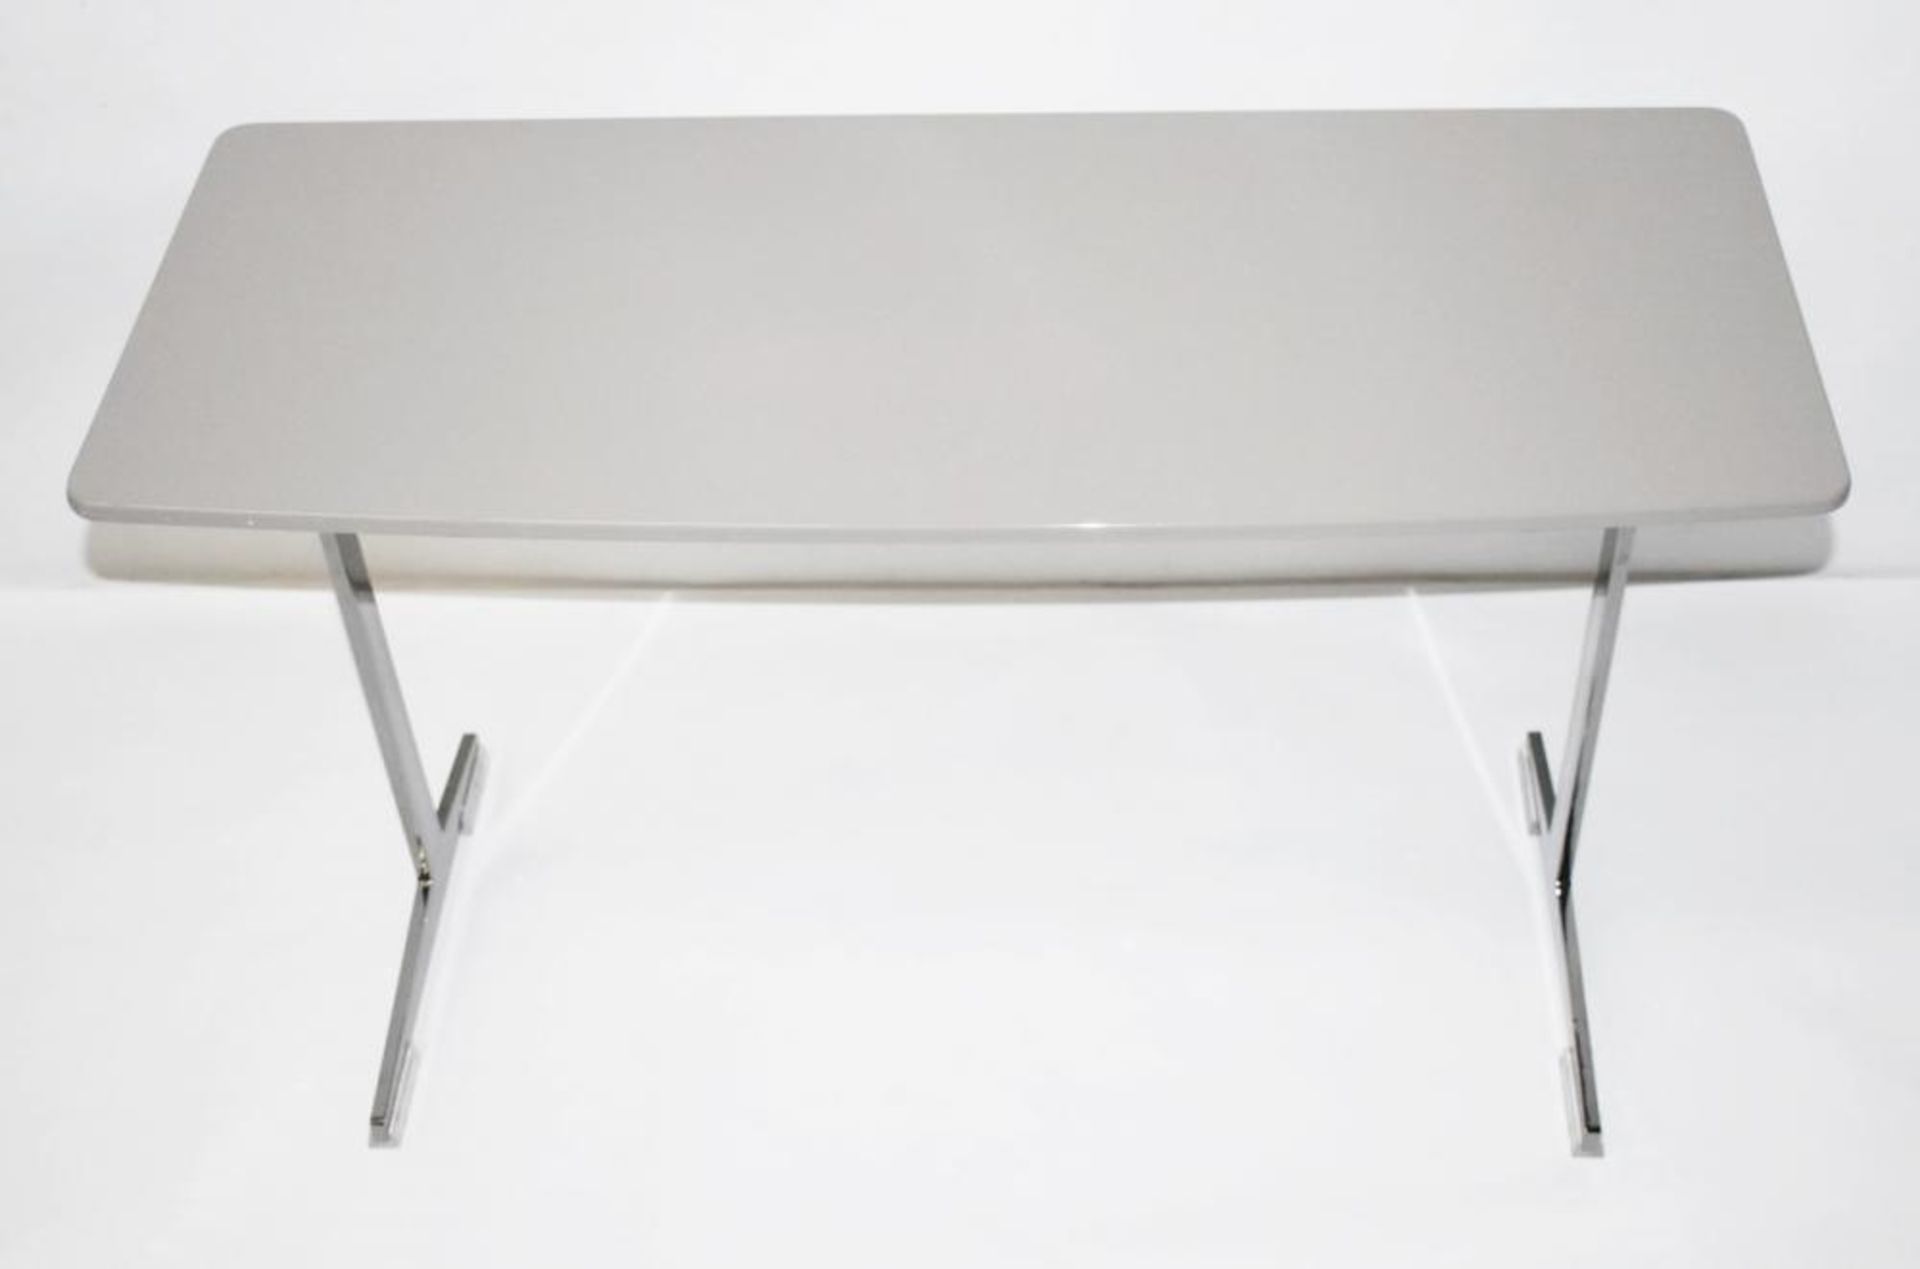 1 x FLEXFORM 'Cestone' Italian Made Designer Slot-In Sidetable In Dove Grey & Chrome - RRP £1,573 - Image 3 of 8